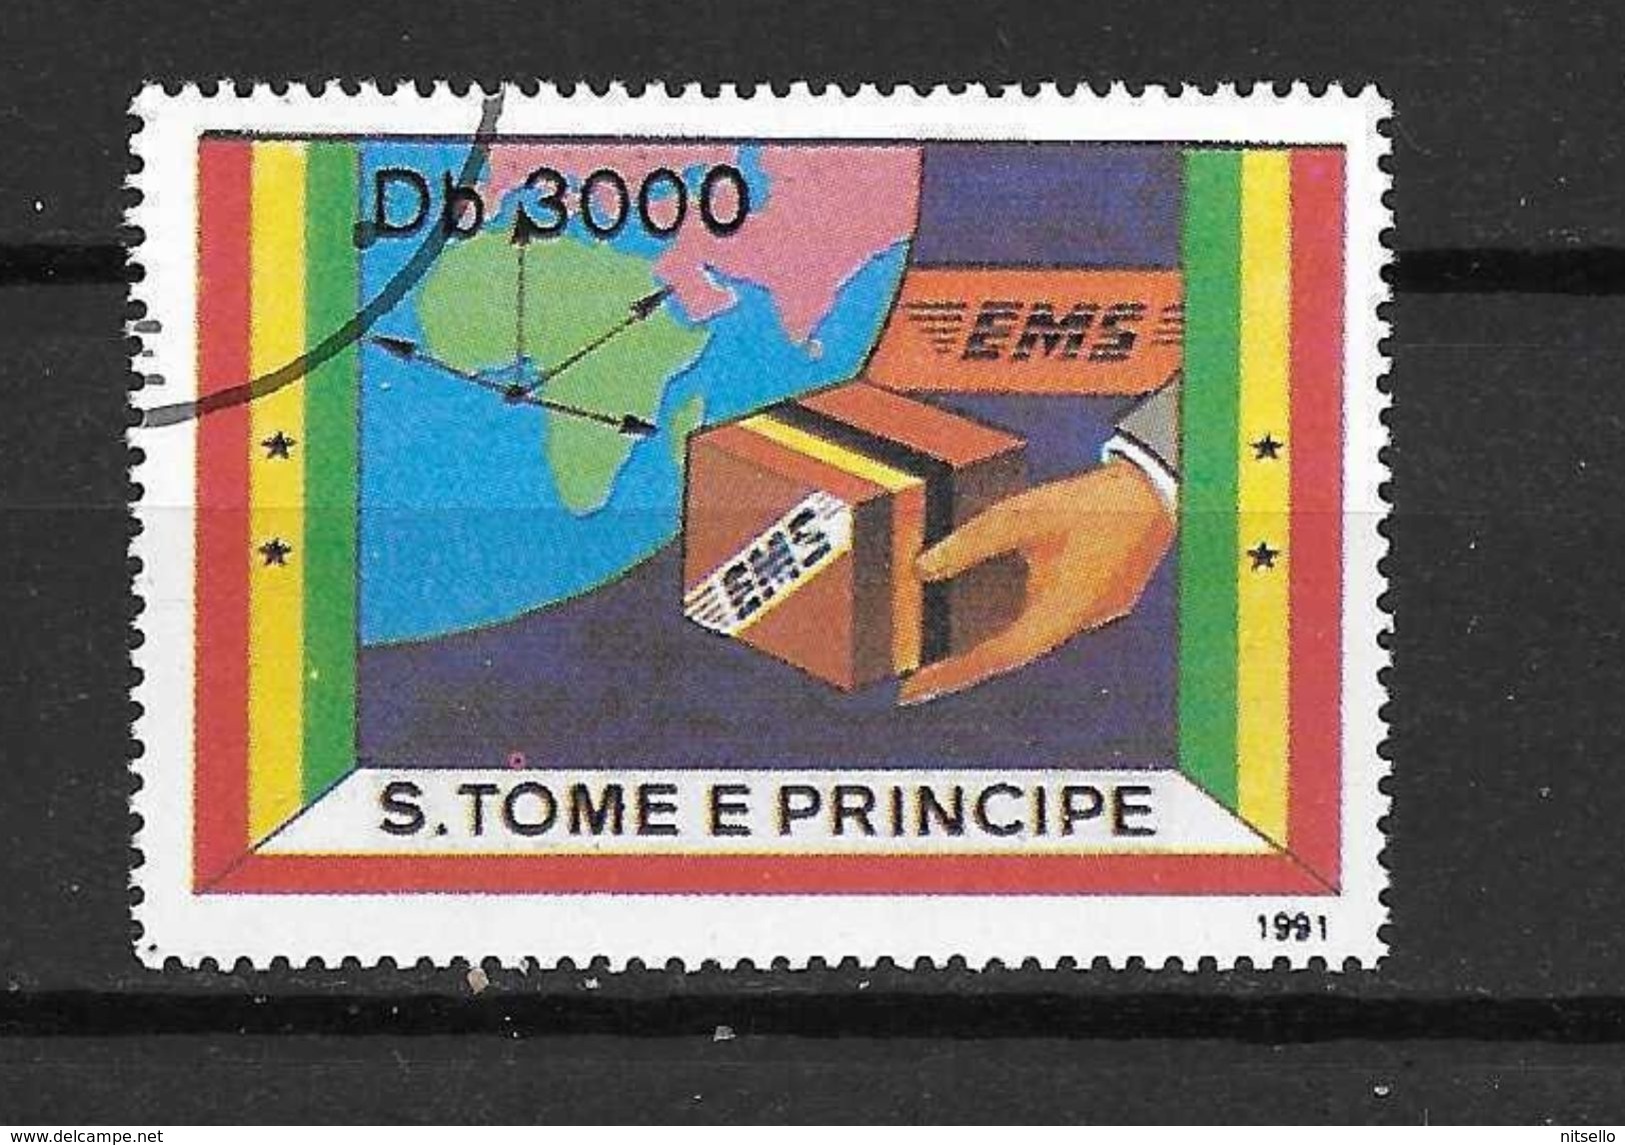 LOTE 1842   ///   SANTO TOME Y PRINCIPE  1981 - Sao Tome And Principe